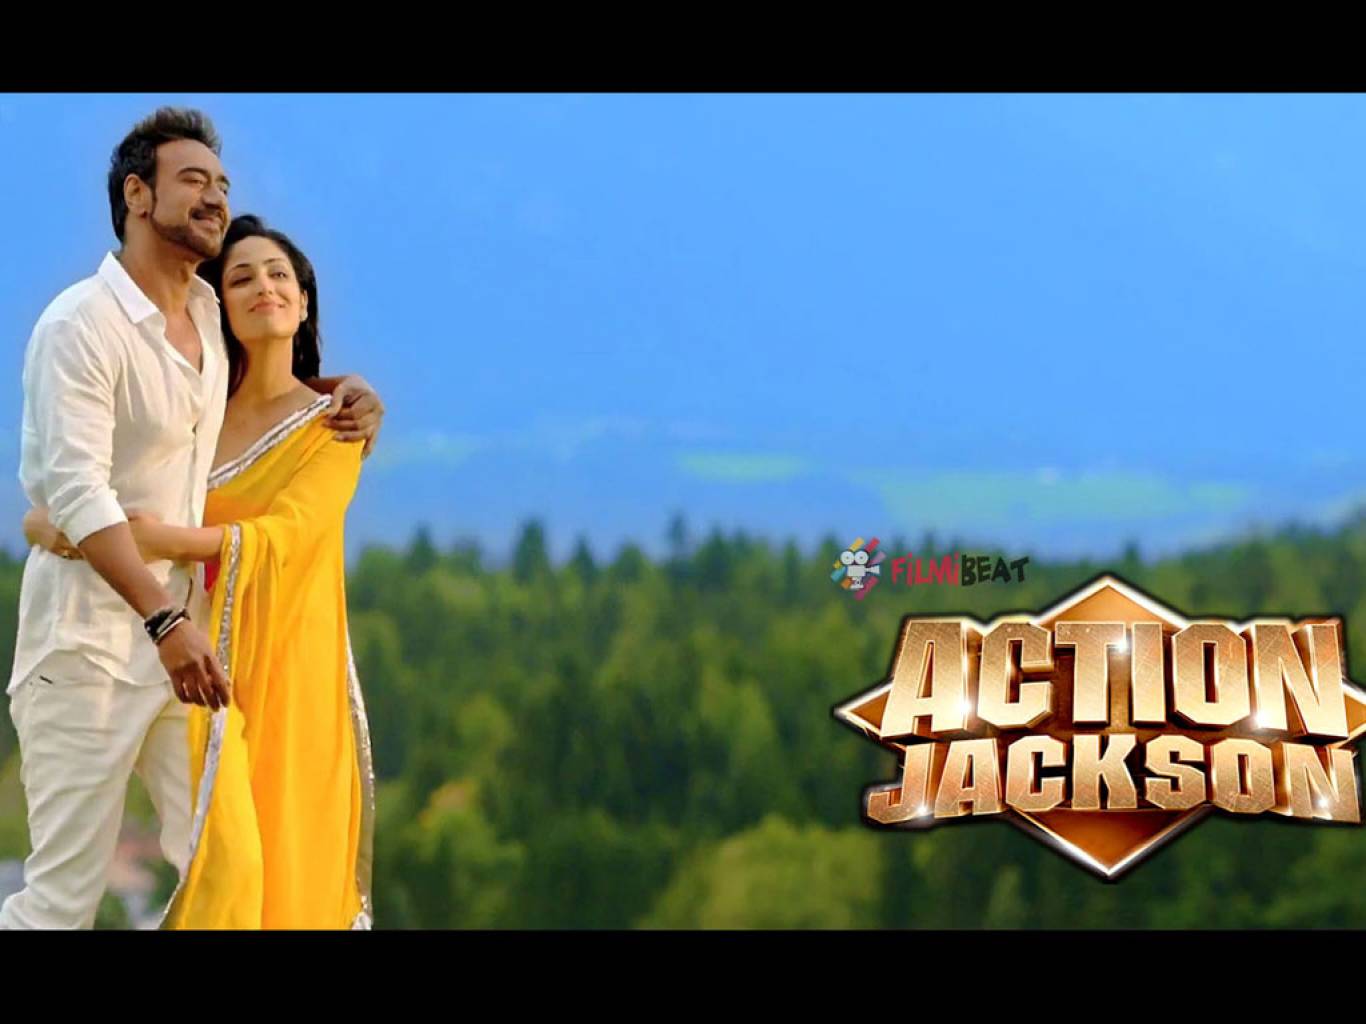 Action Jackson Movie HD Wallpaper. Action Jackson HD Movie